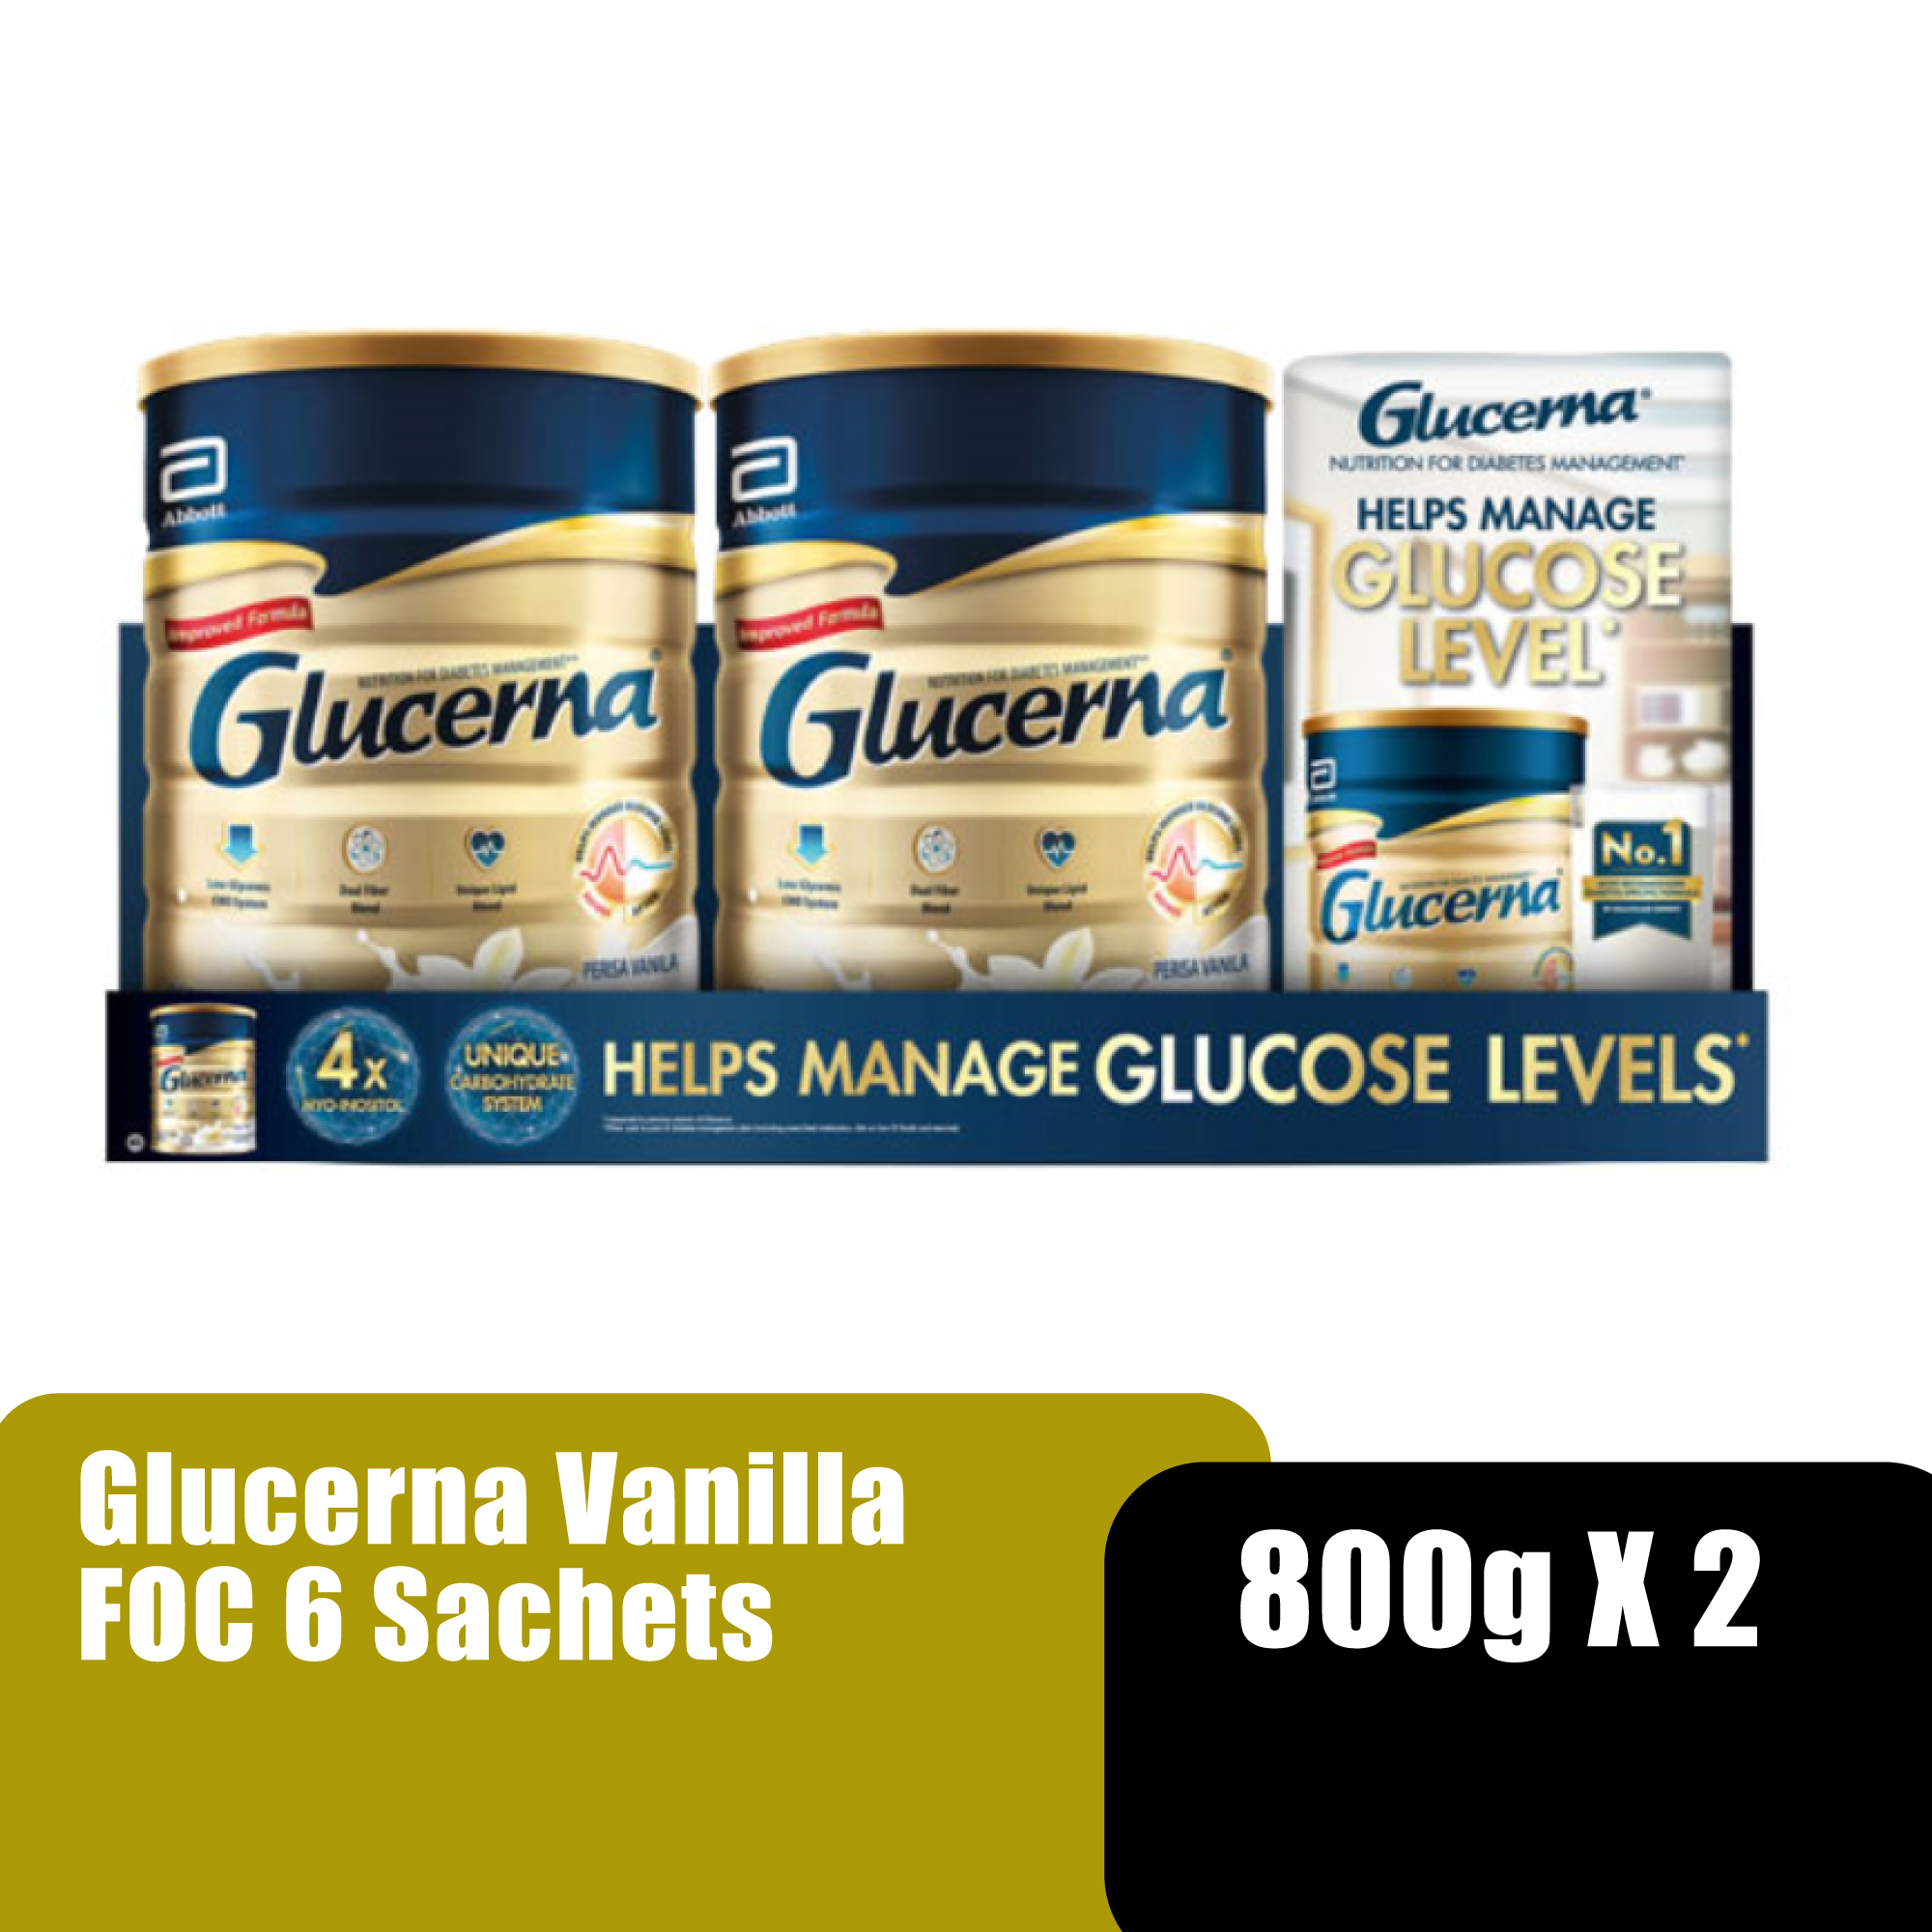 Glucerna Vanilla Milk, Diabetic Milk as Meal Replacement and in Tube Feeding Formula - 800g x 2 [FOC 6 Sachets]